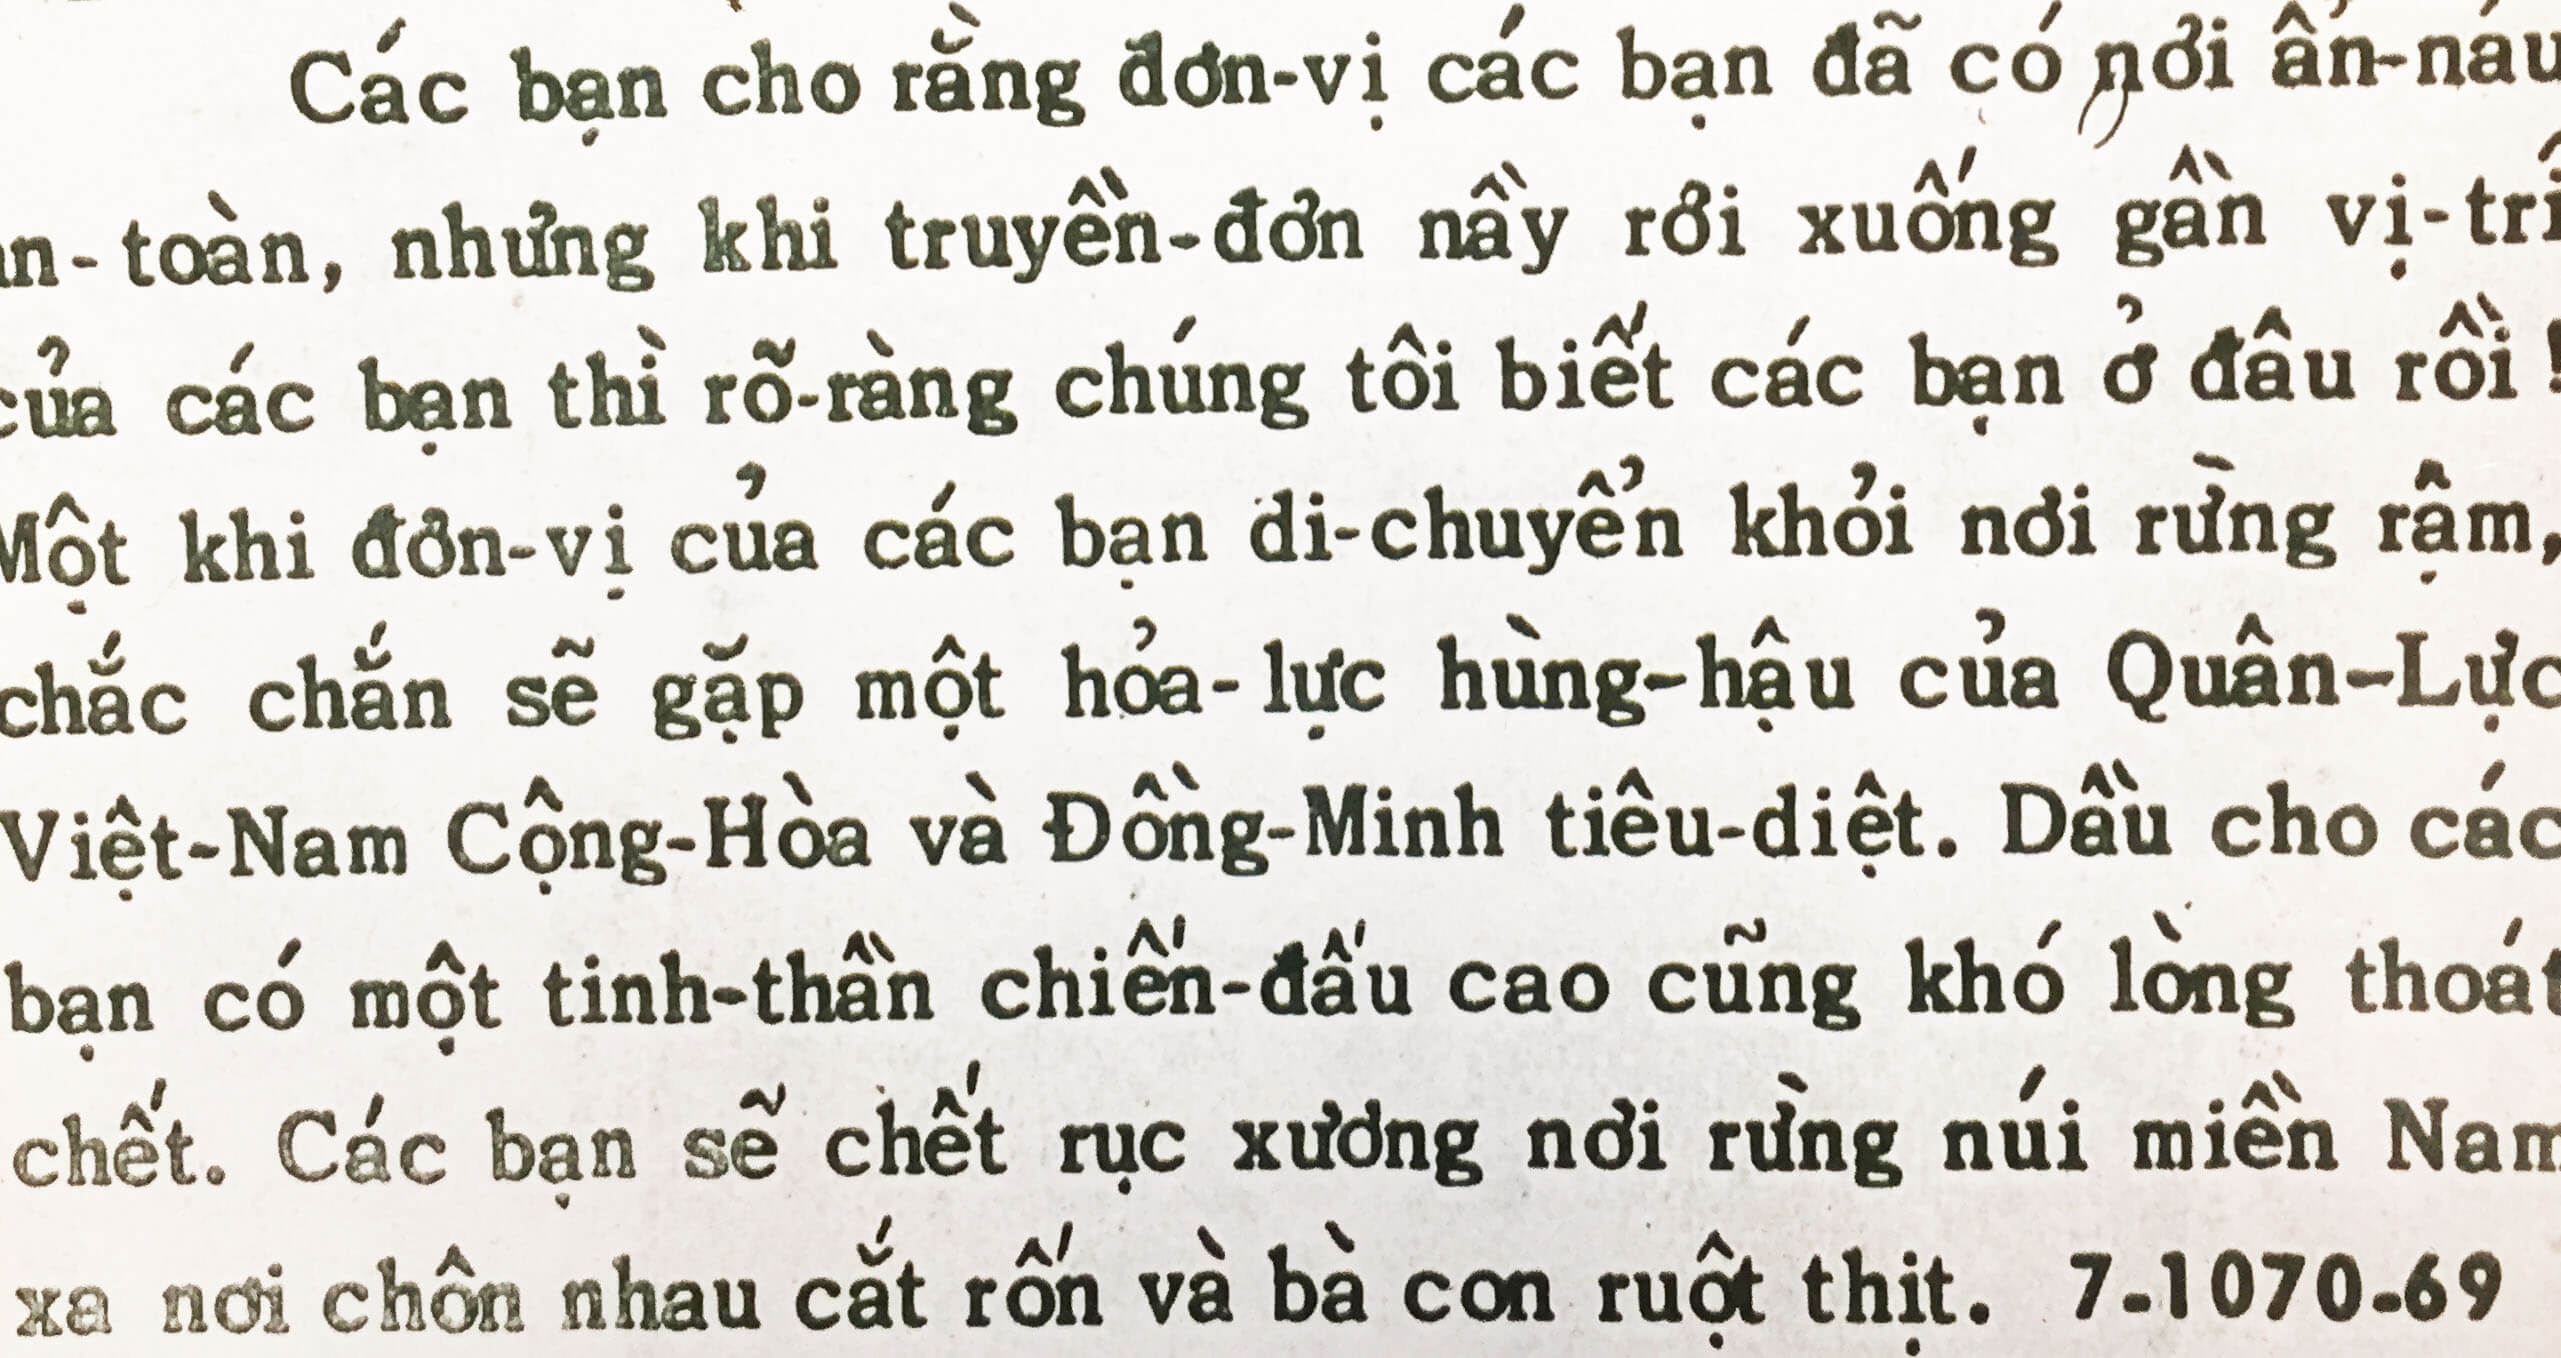 Vietnamese text